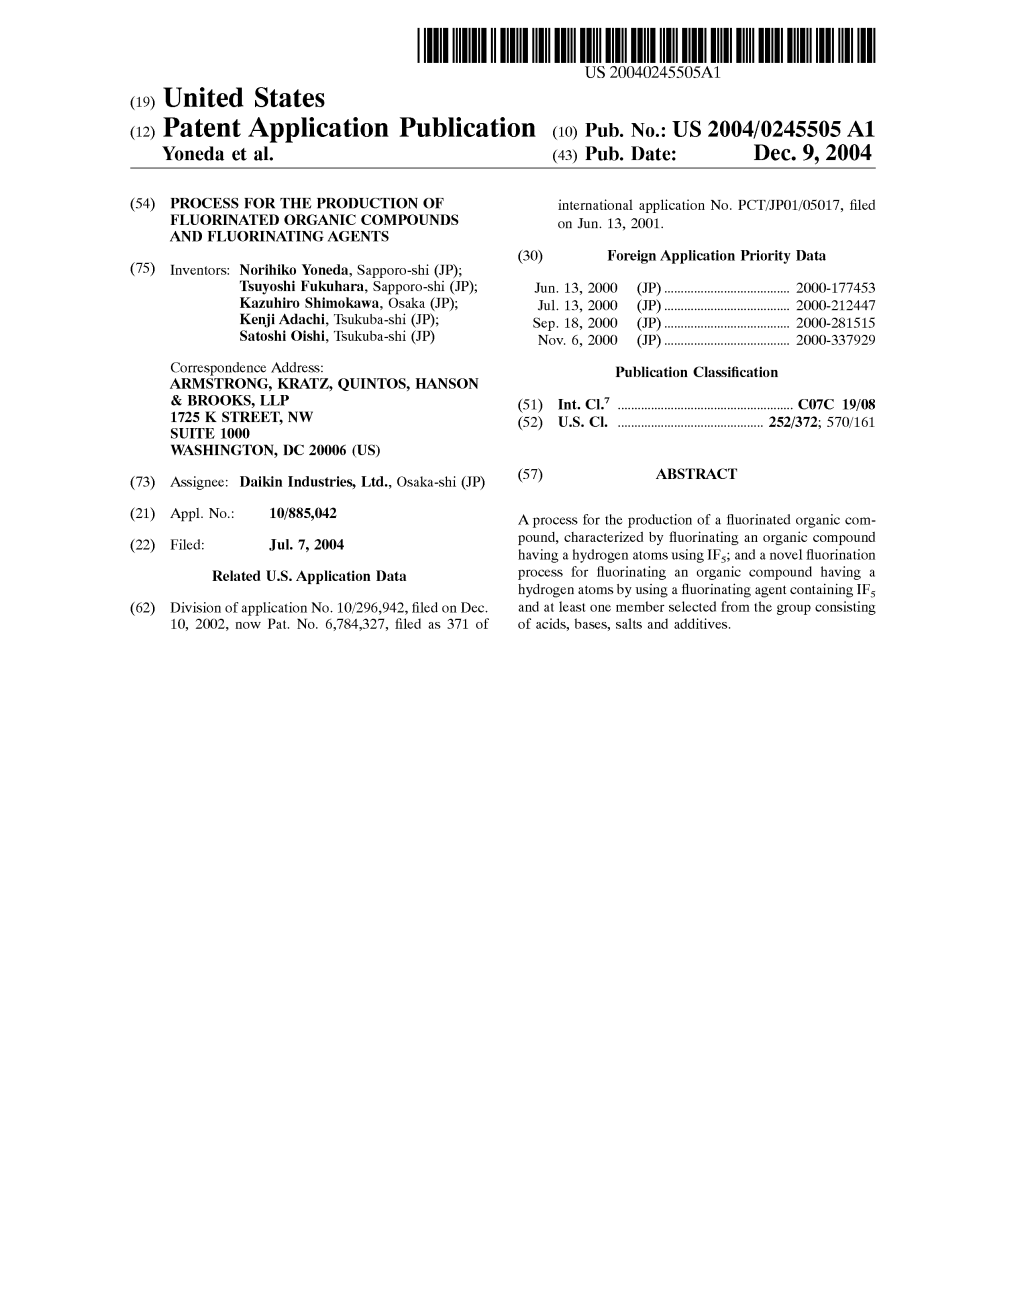 (12) Patent Application Publication (10) Pub. No.: US 2004/0245505 A1 Yoneda Et Al